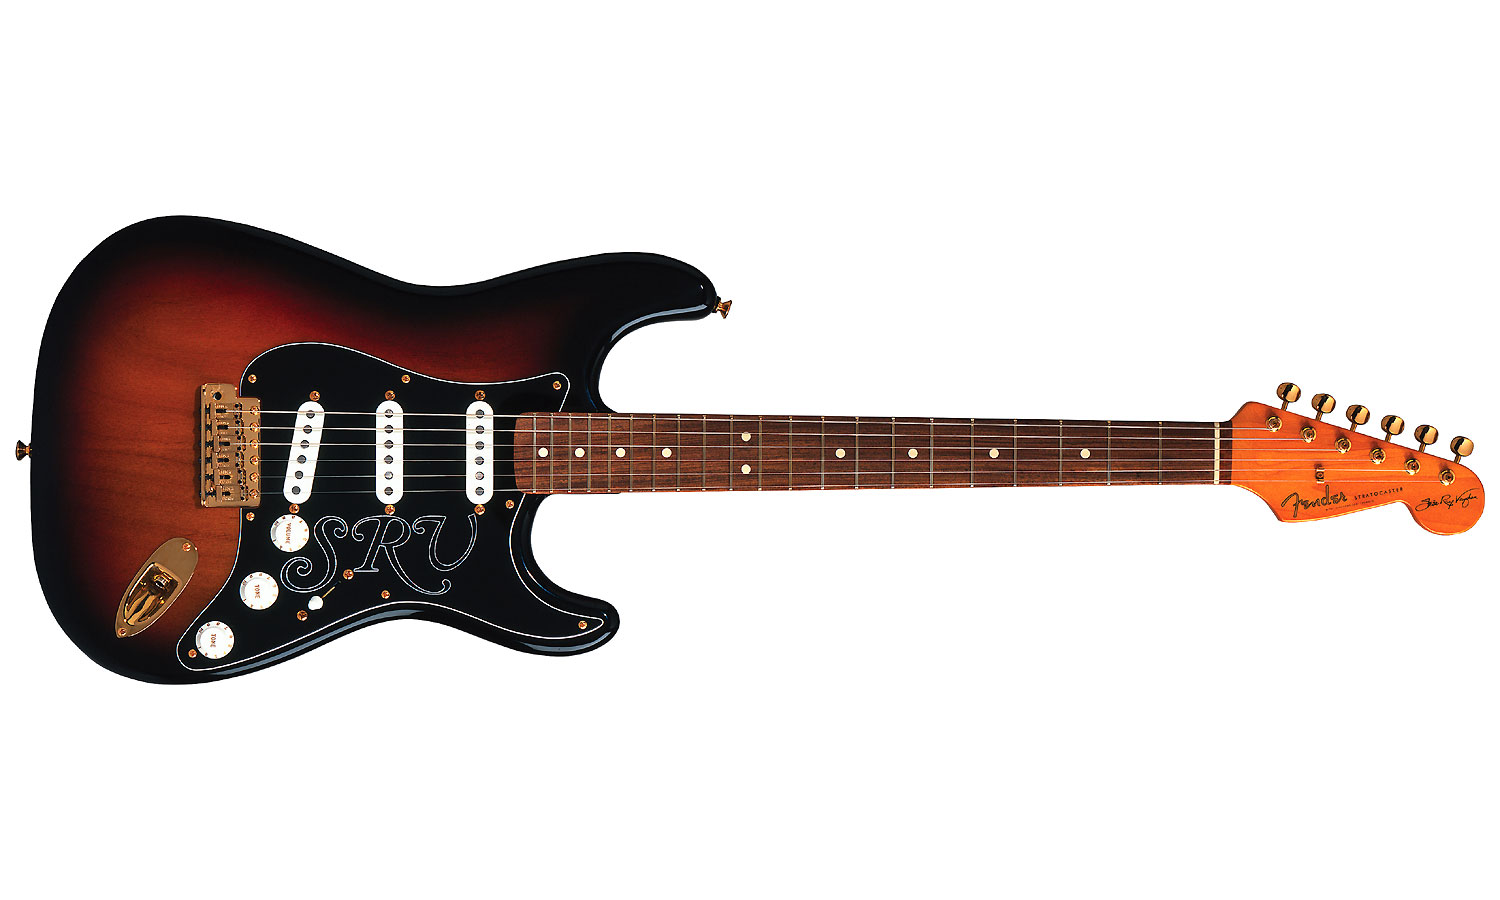 Fender Stevie Ray Vaughan Strat Usa Signature Sss Pf - 3-color Sunburst - Str shape electric guitar - Variation 1